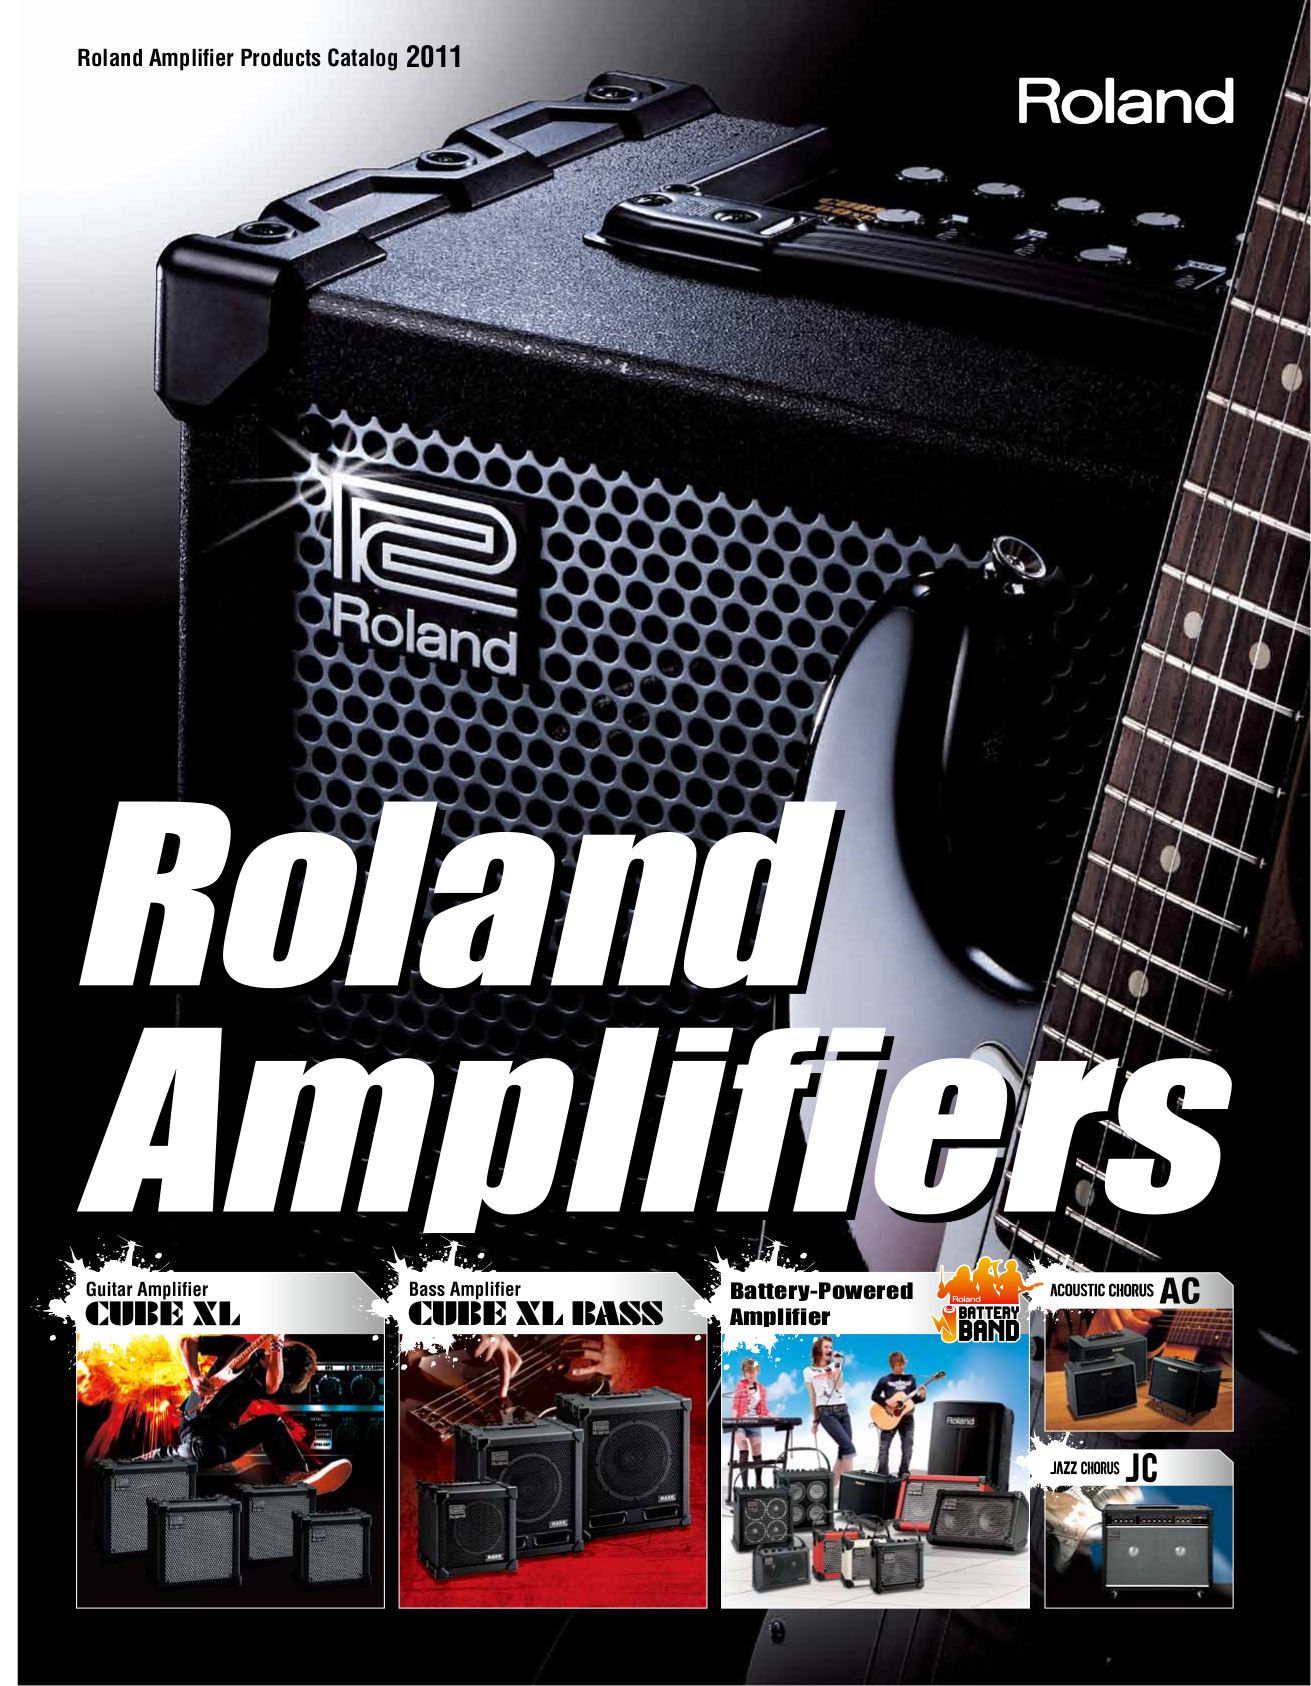 PDF manual for Roland Amp AC-33